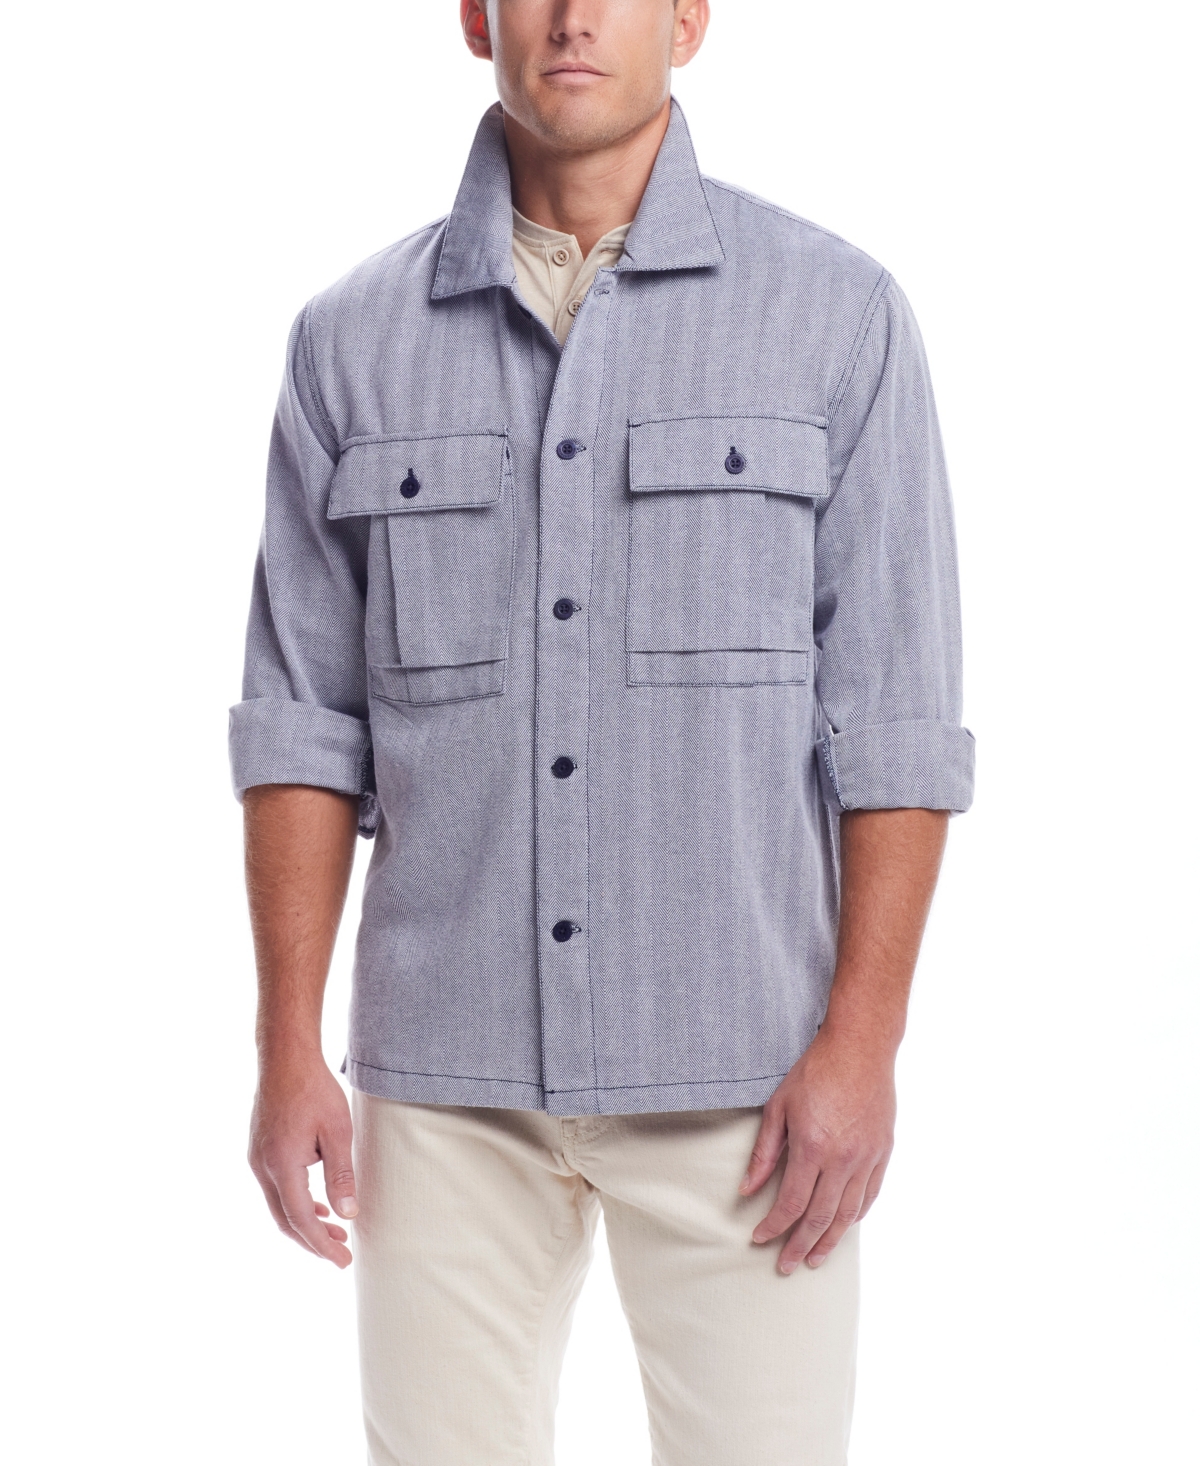 Men's Summer Long Sleeve Shirt Jacket - Navy